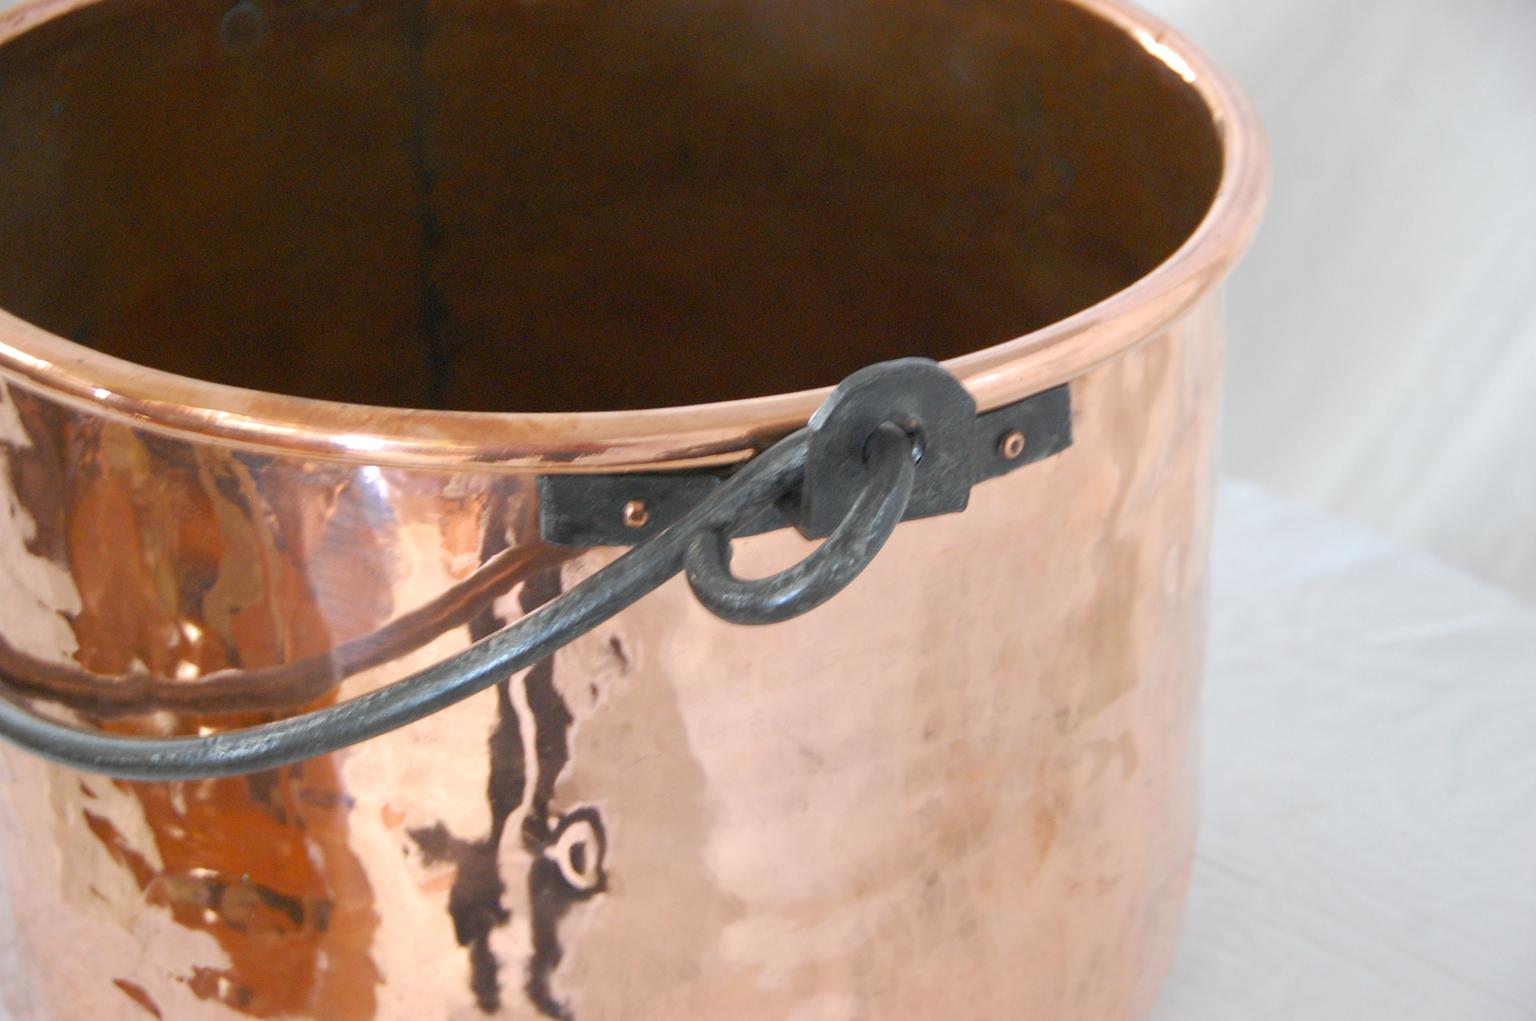 English 19th century large copper cauldron of dovetailed construction, heavy iron swing handle. This cauldron of 16